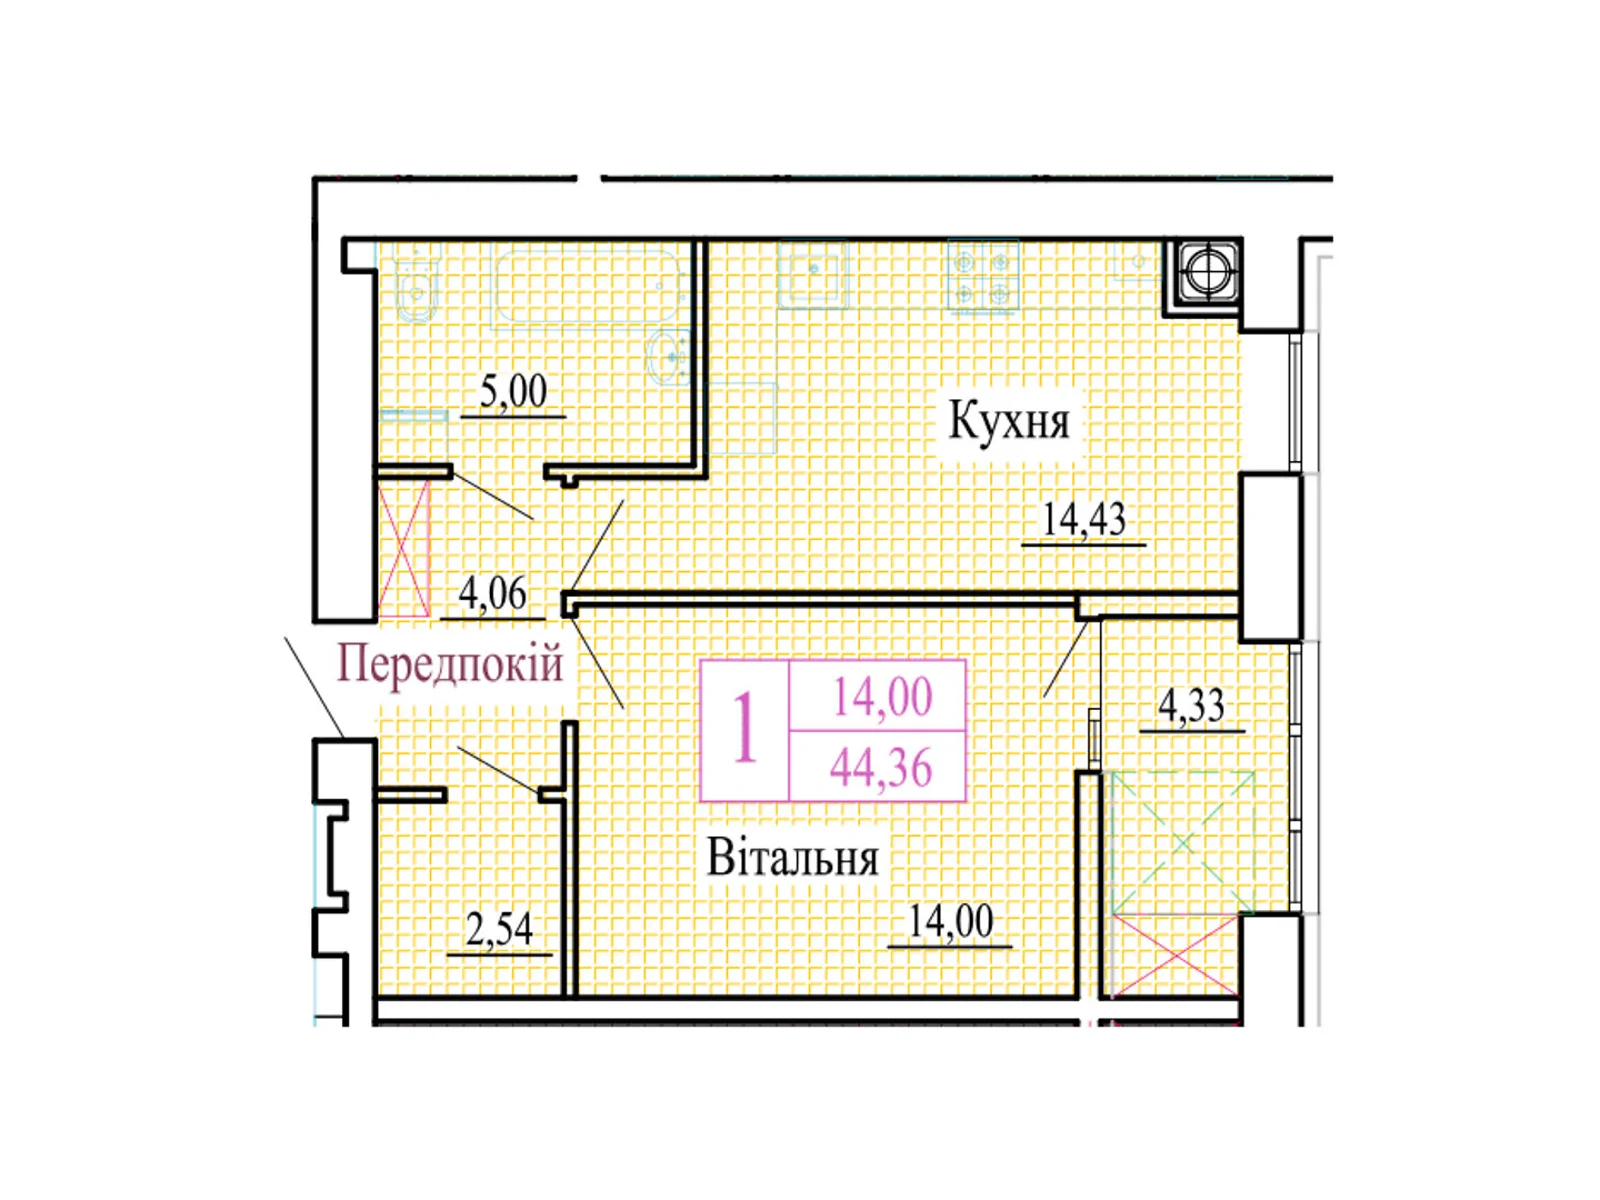 1-кімнатна квартира 44.36 кв. м у Луцьку, цена: 35355 $